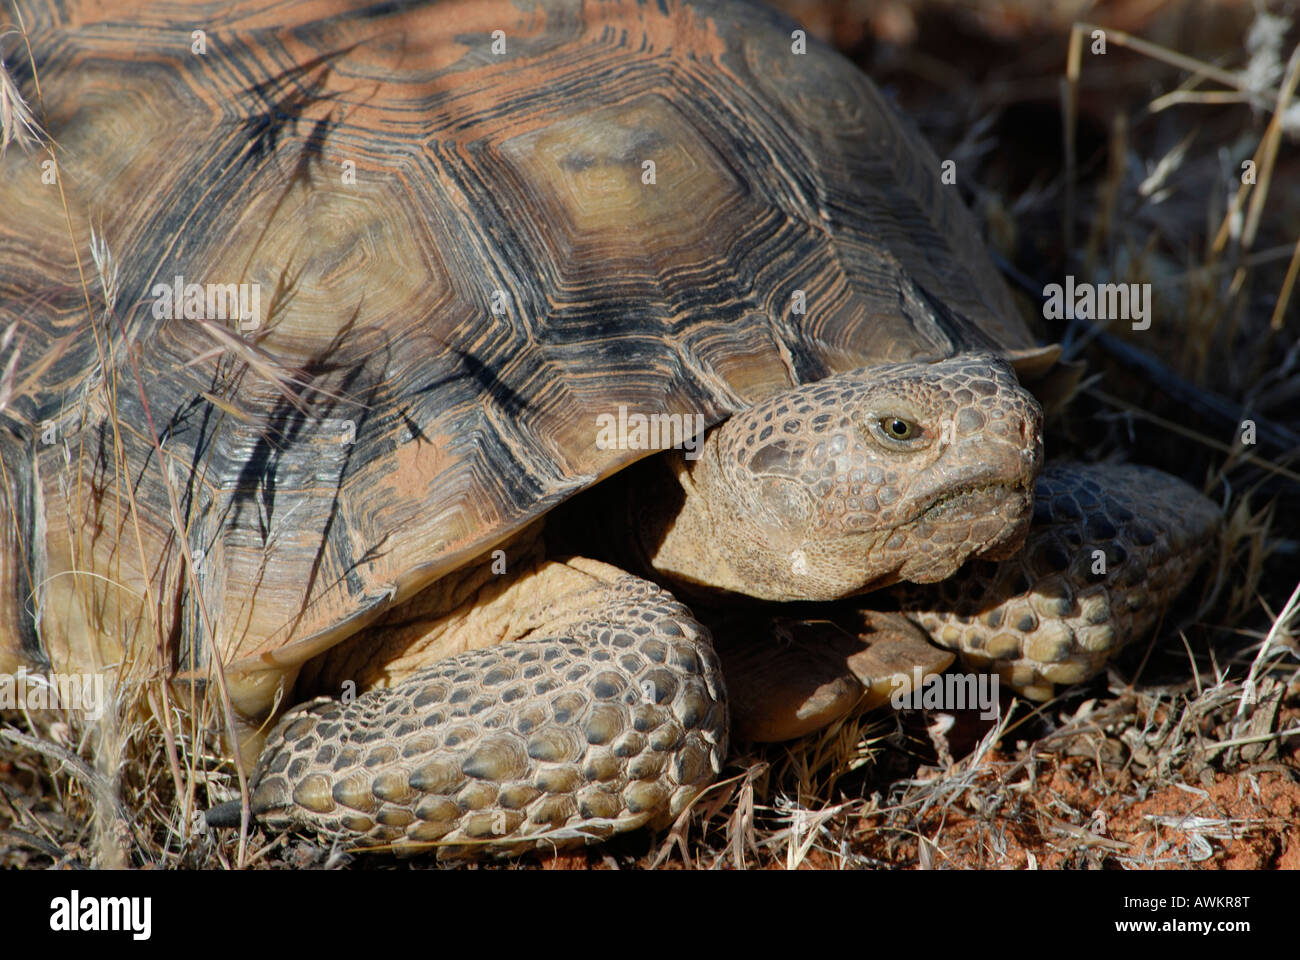 Stock photo of a desert tortoise closeup. Stock Photo